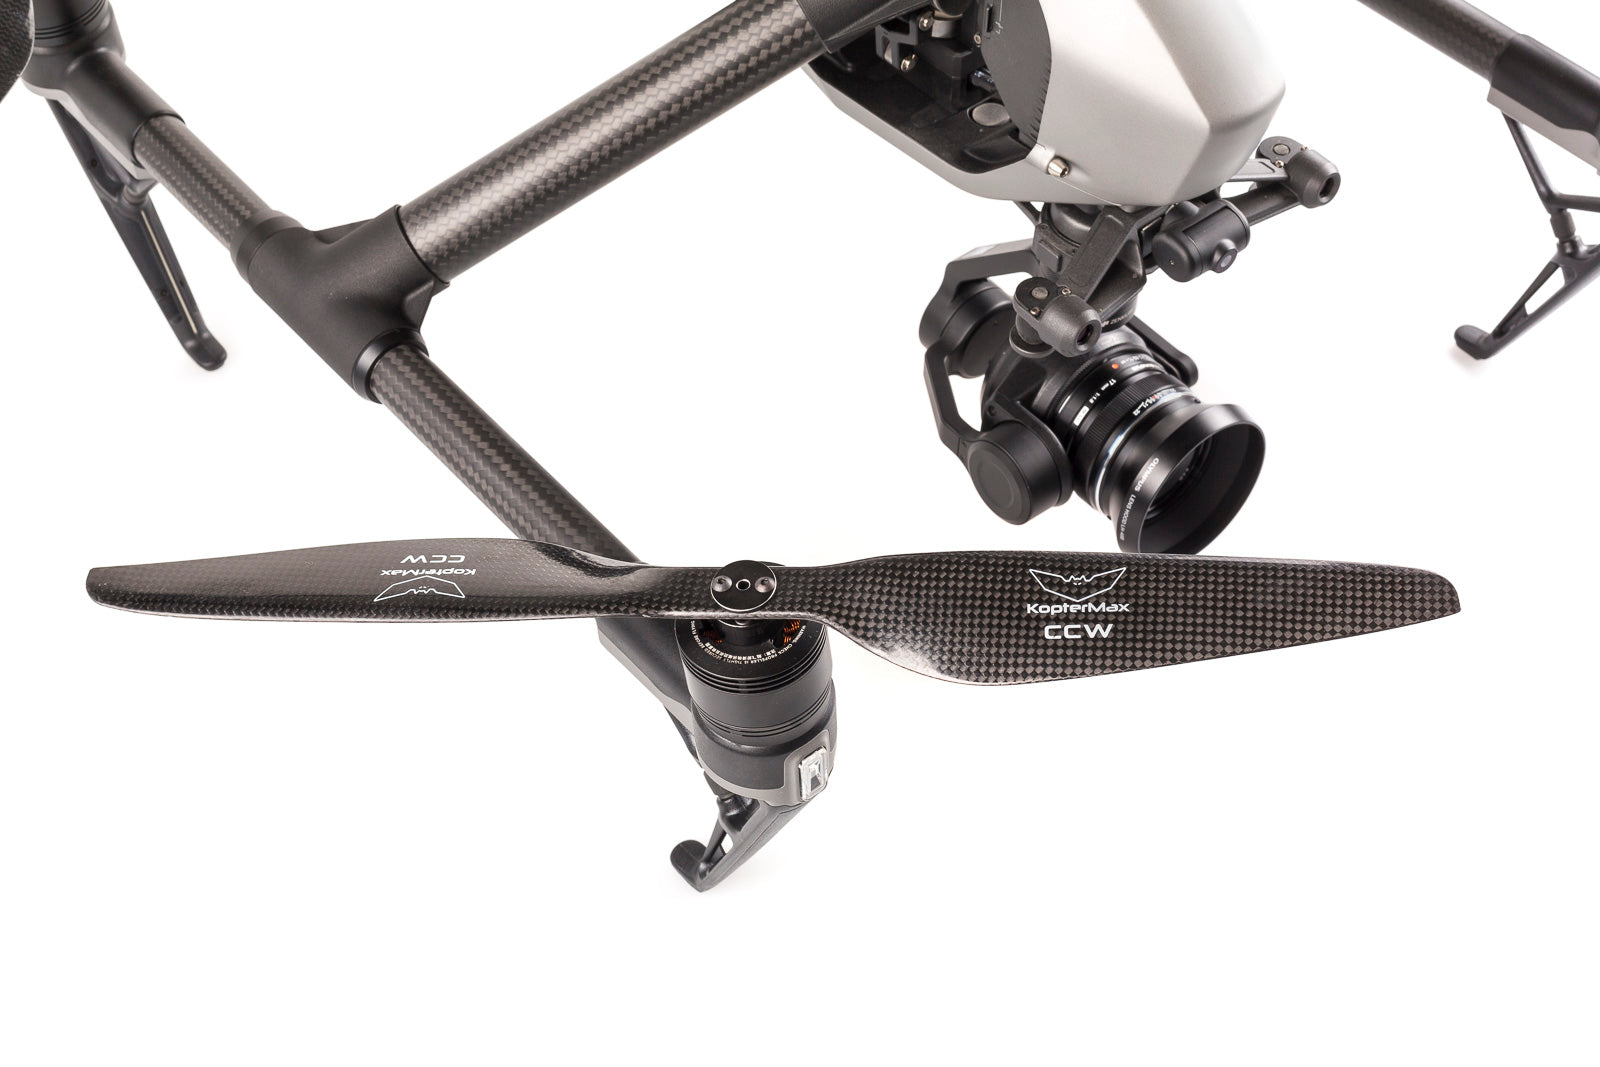 Carbon Fiber propeller adapters for DJI Inspire 2 drone